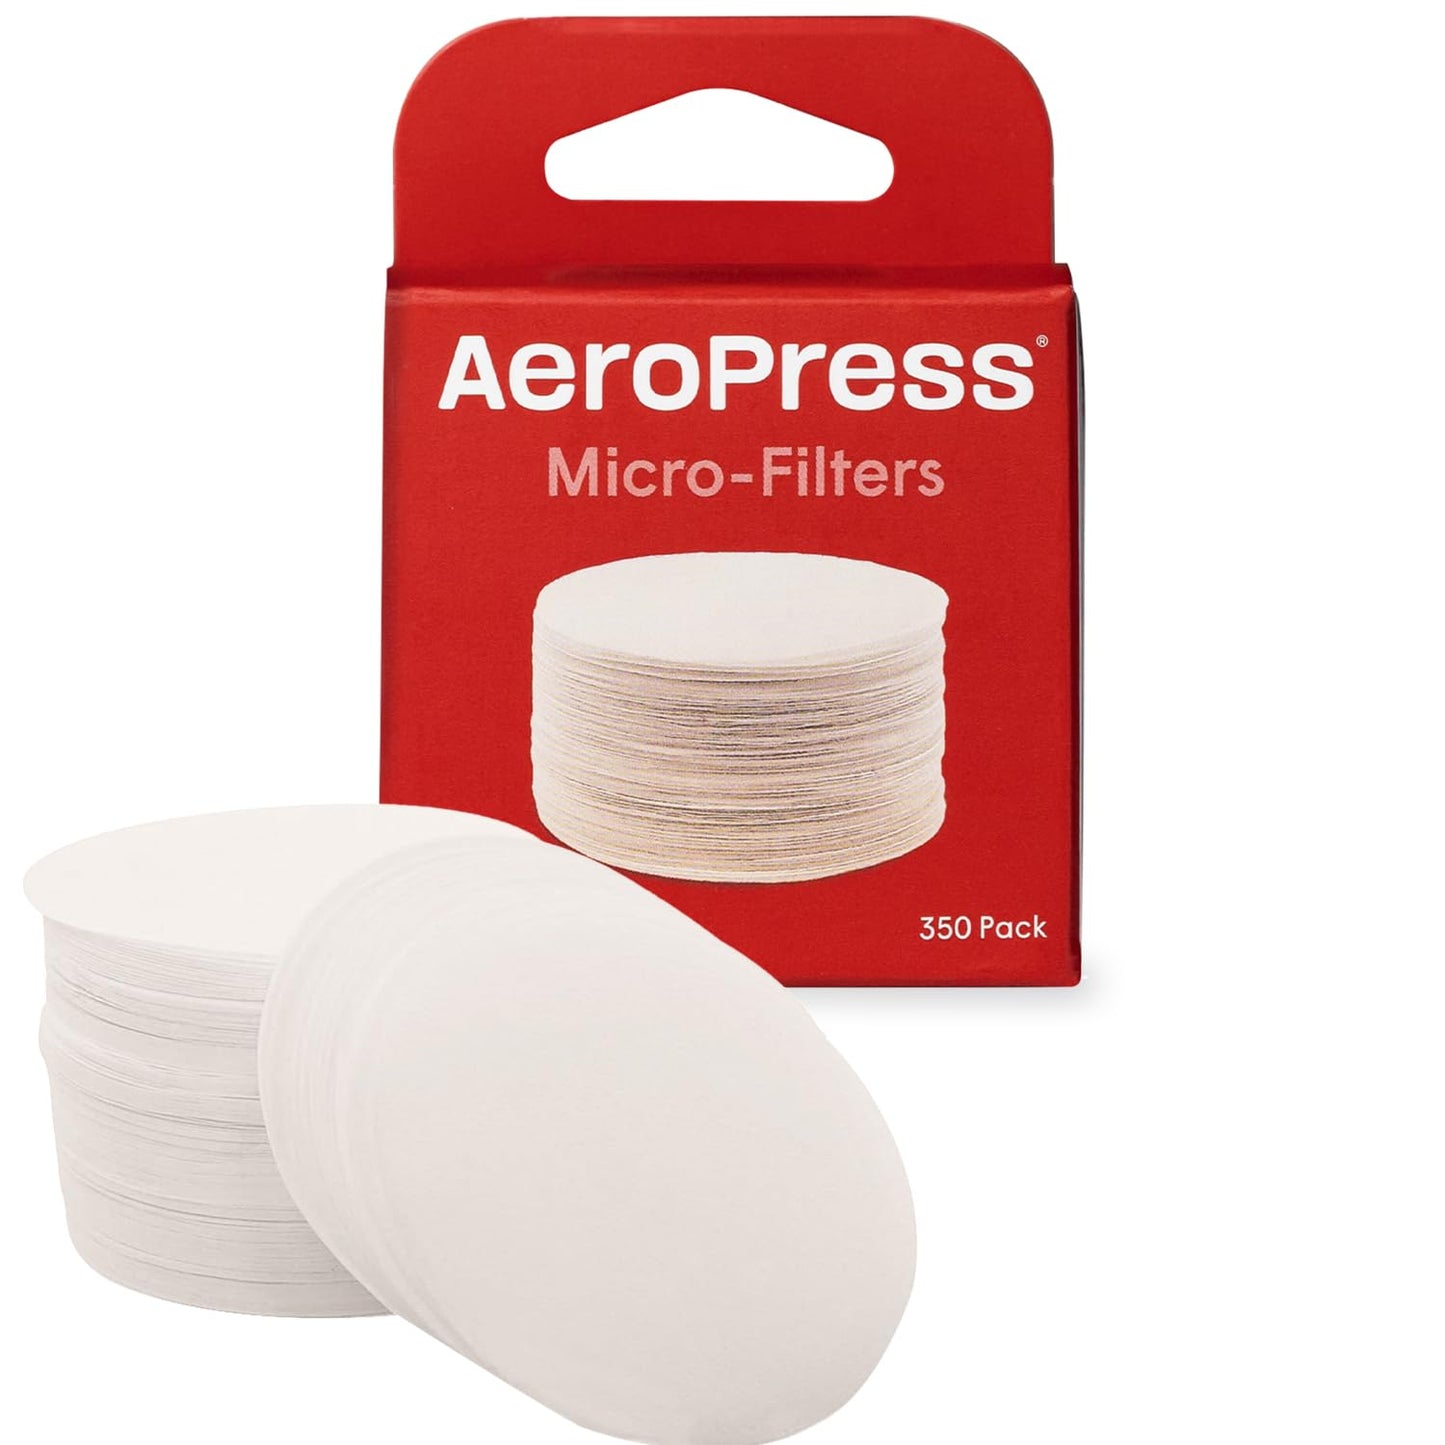 Aeropress Micro-filters - 350 Pack